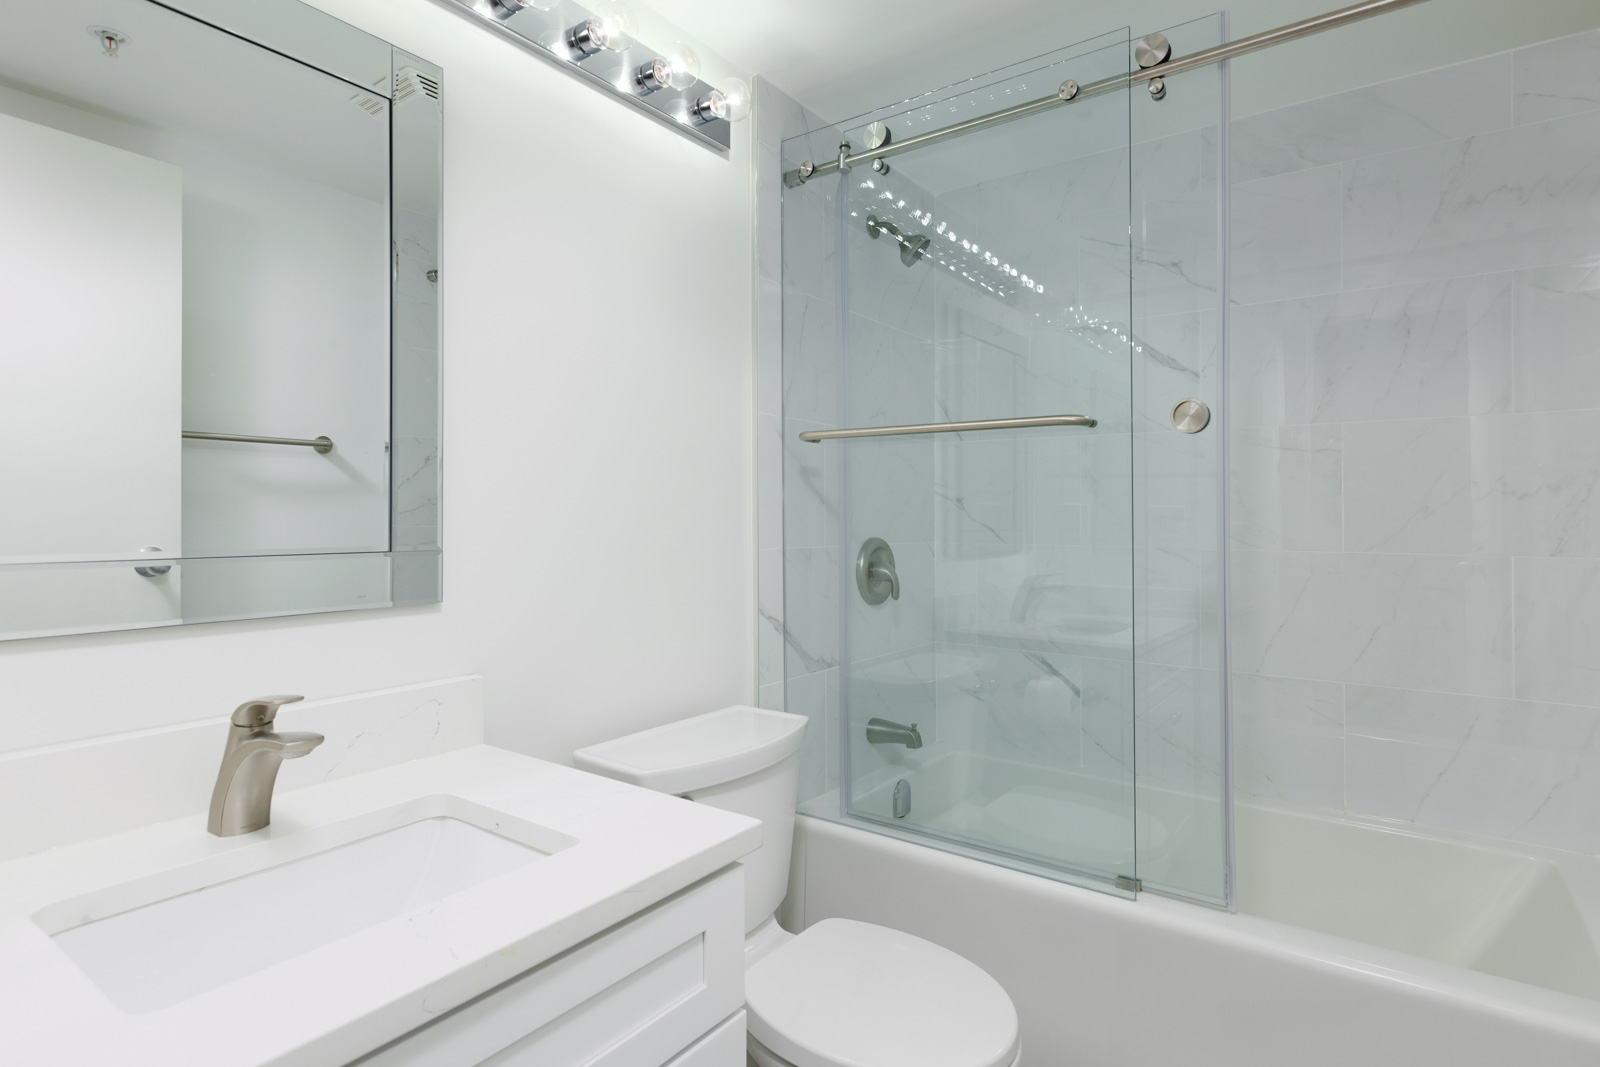 Bathroom with white walls and bath tub